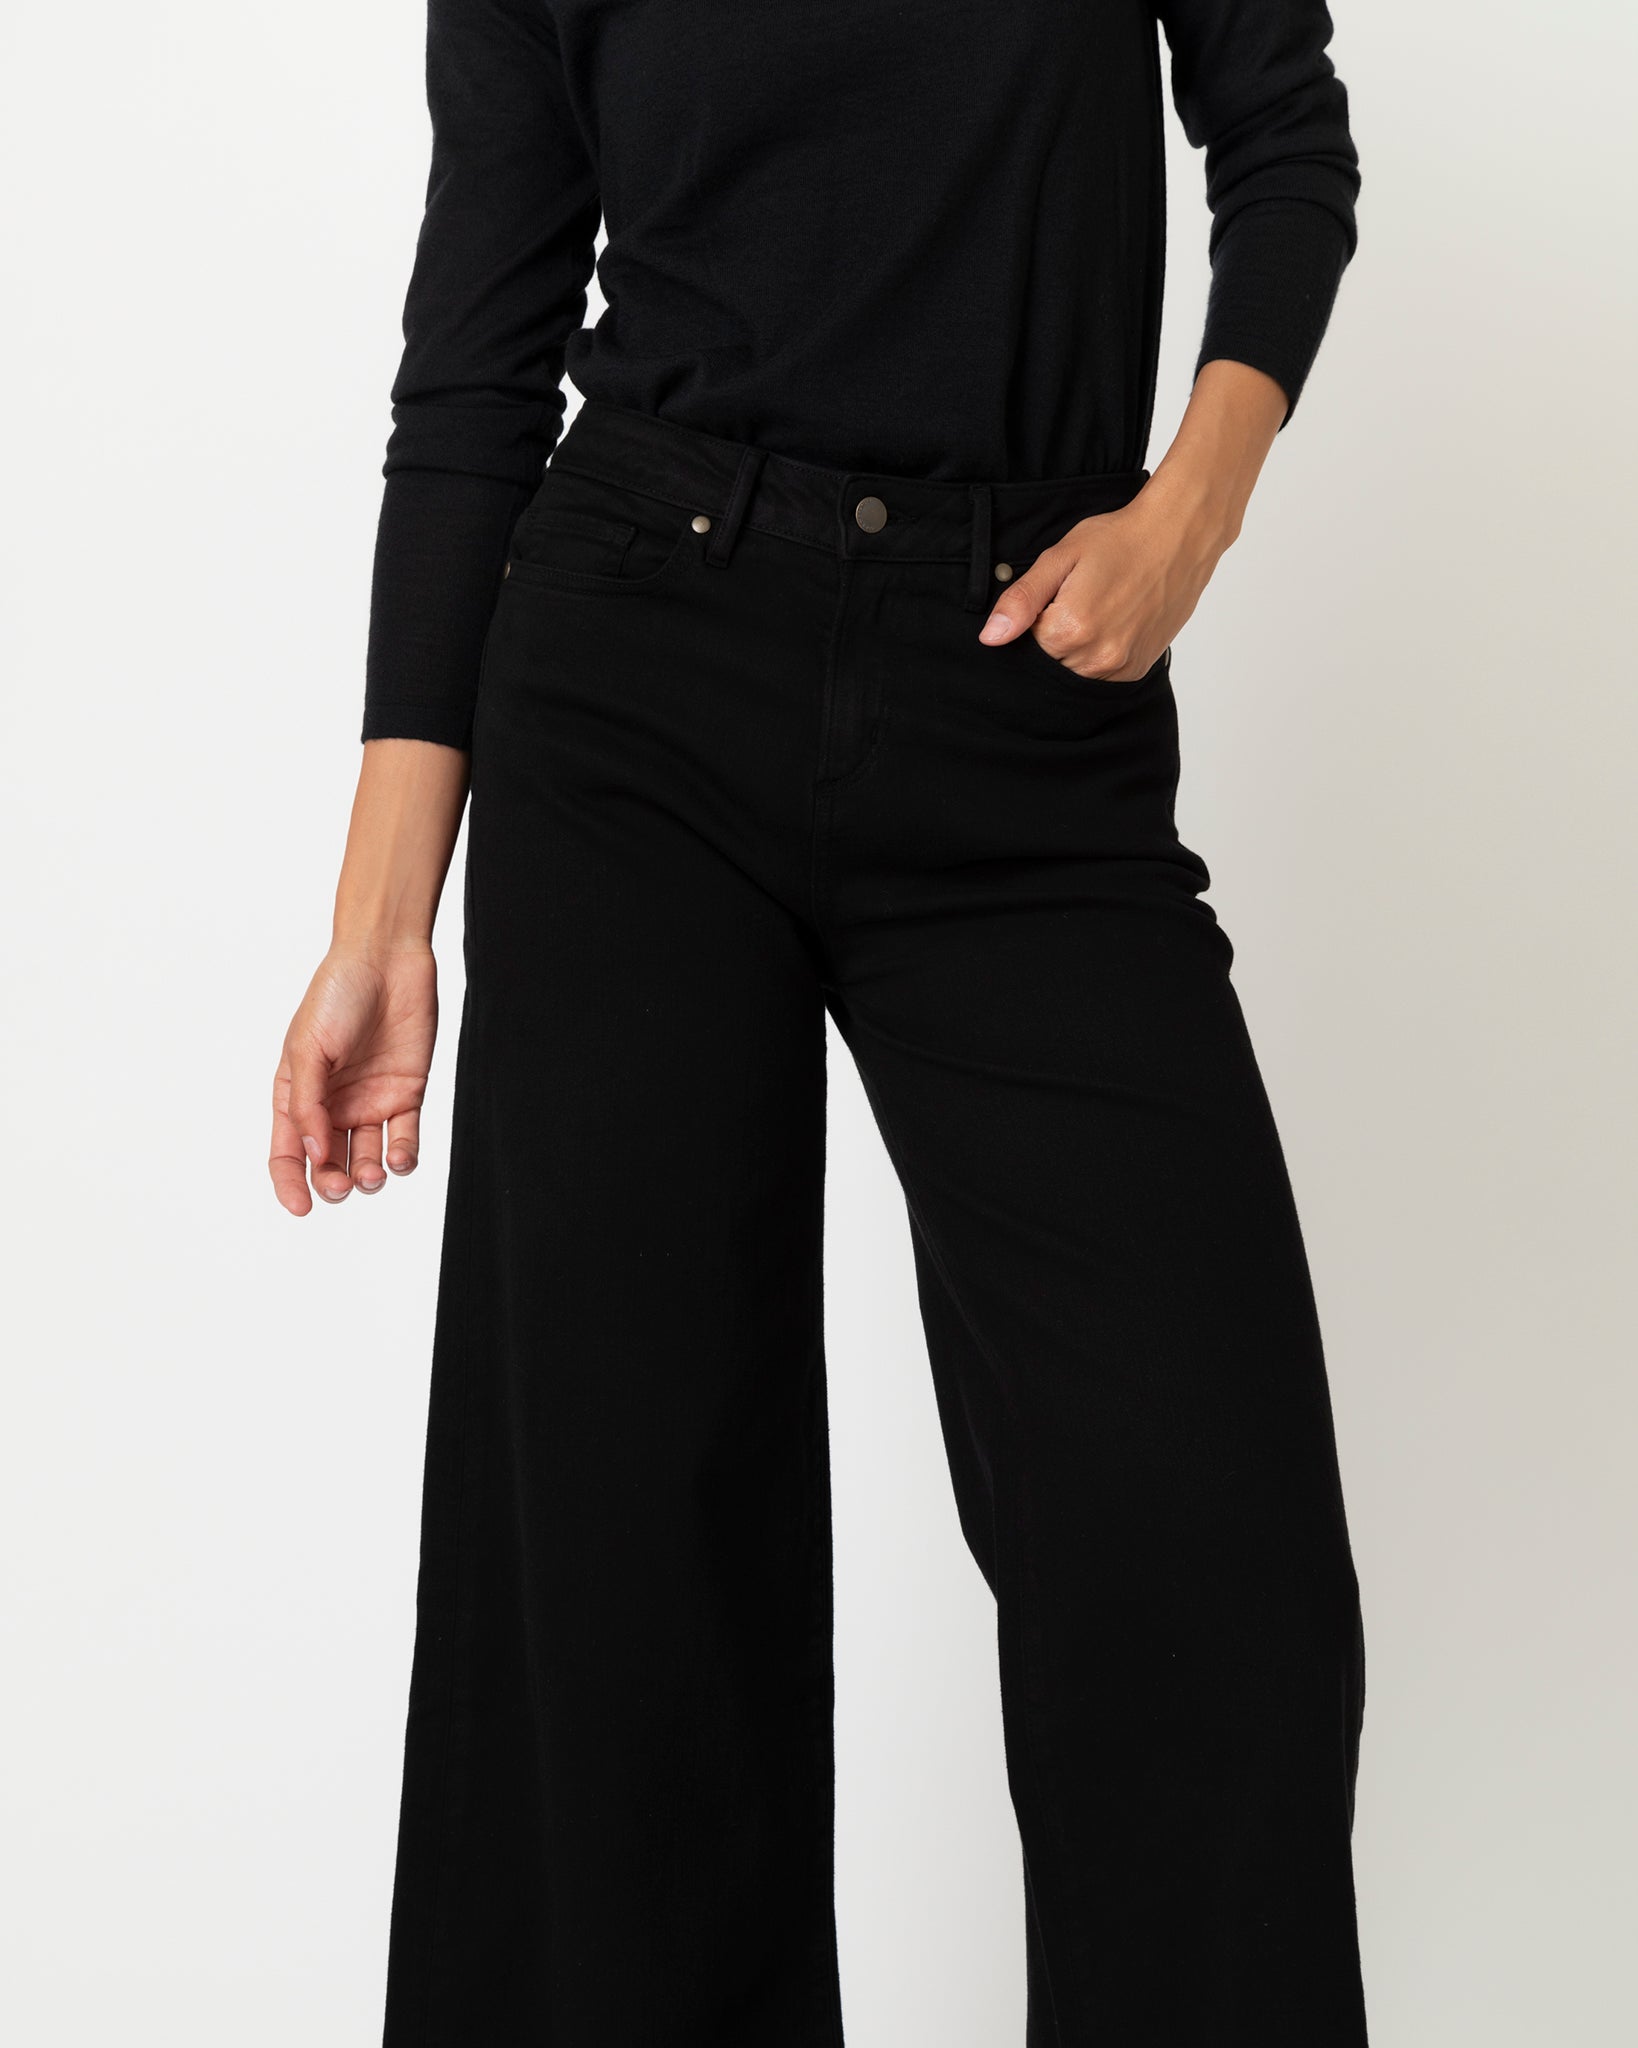 | Denim Mashburn Cropped Ann Black Jean in Wide-Leg 5-Pocket Stretch Shop